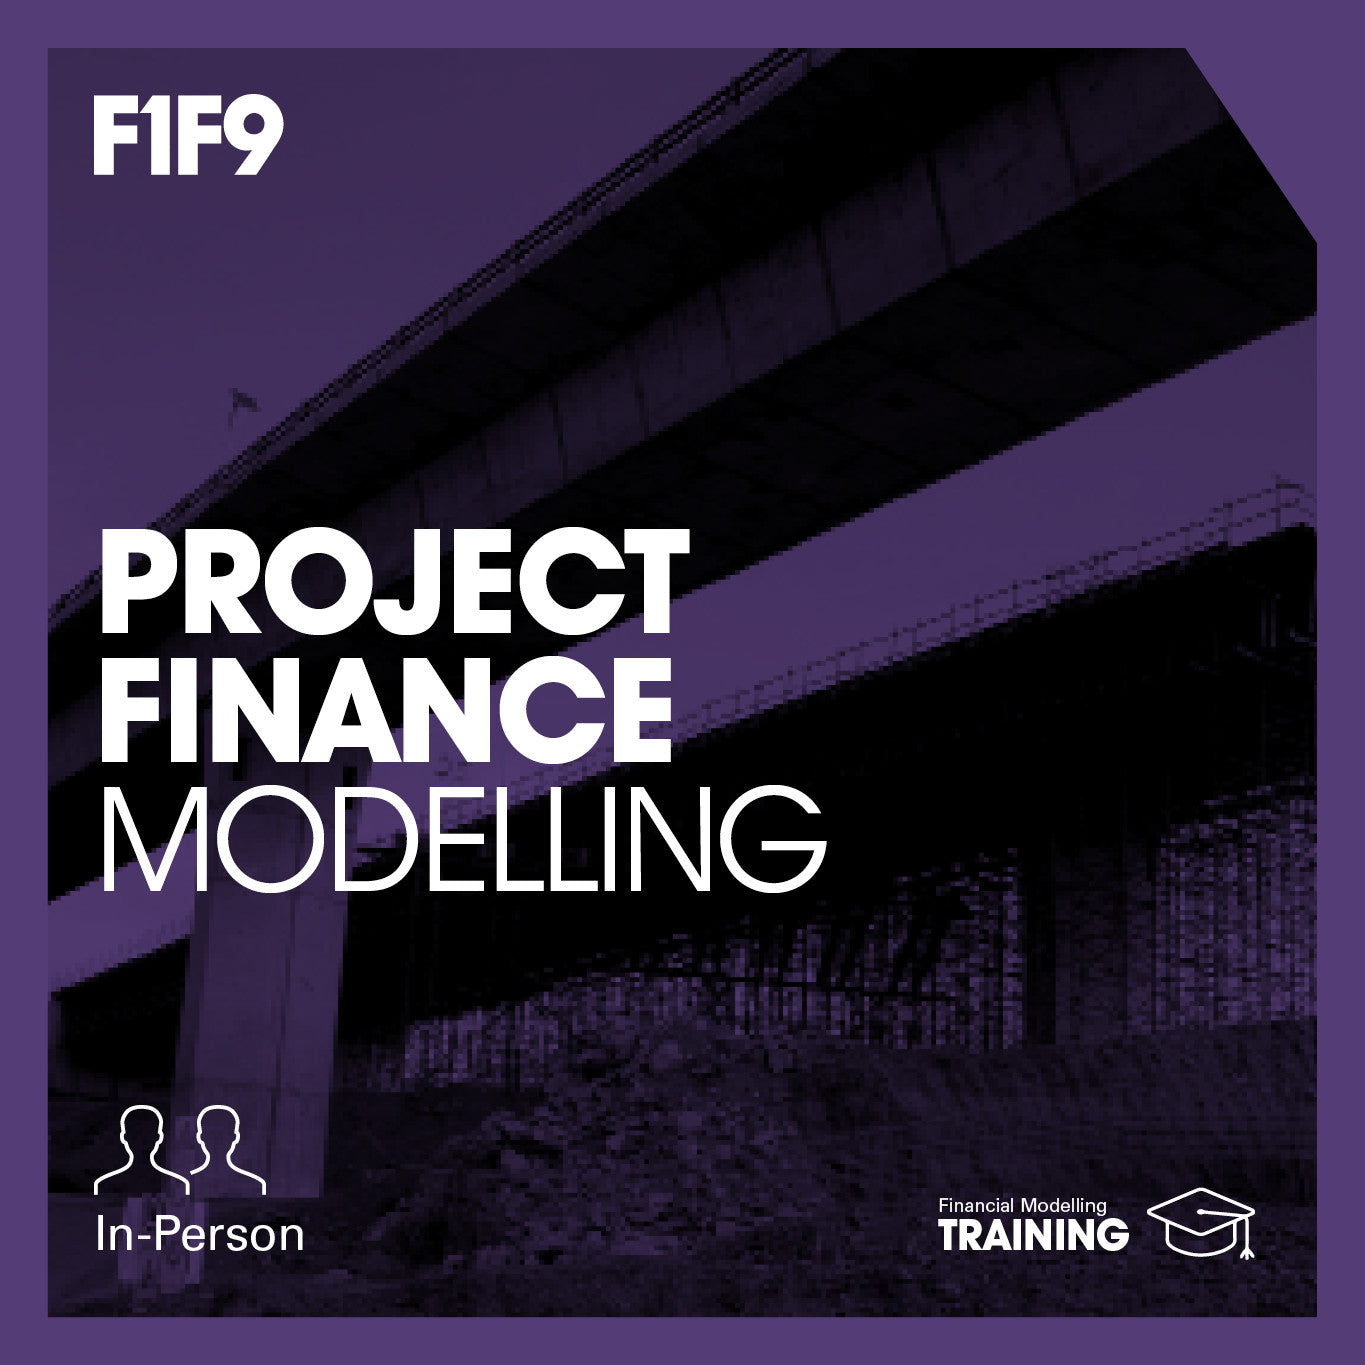 Project Finance Modelling F1F9